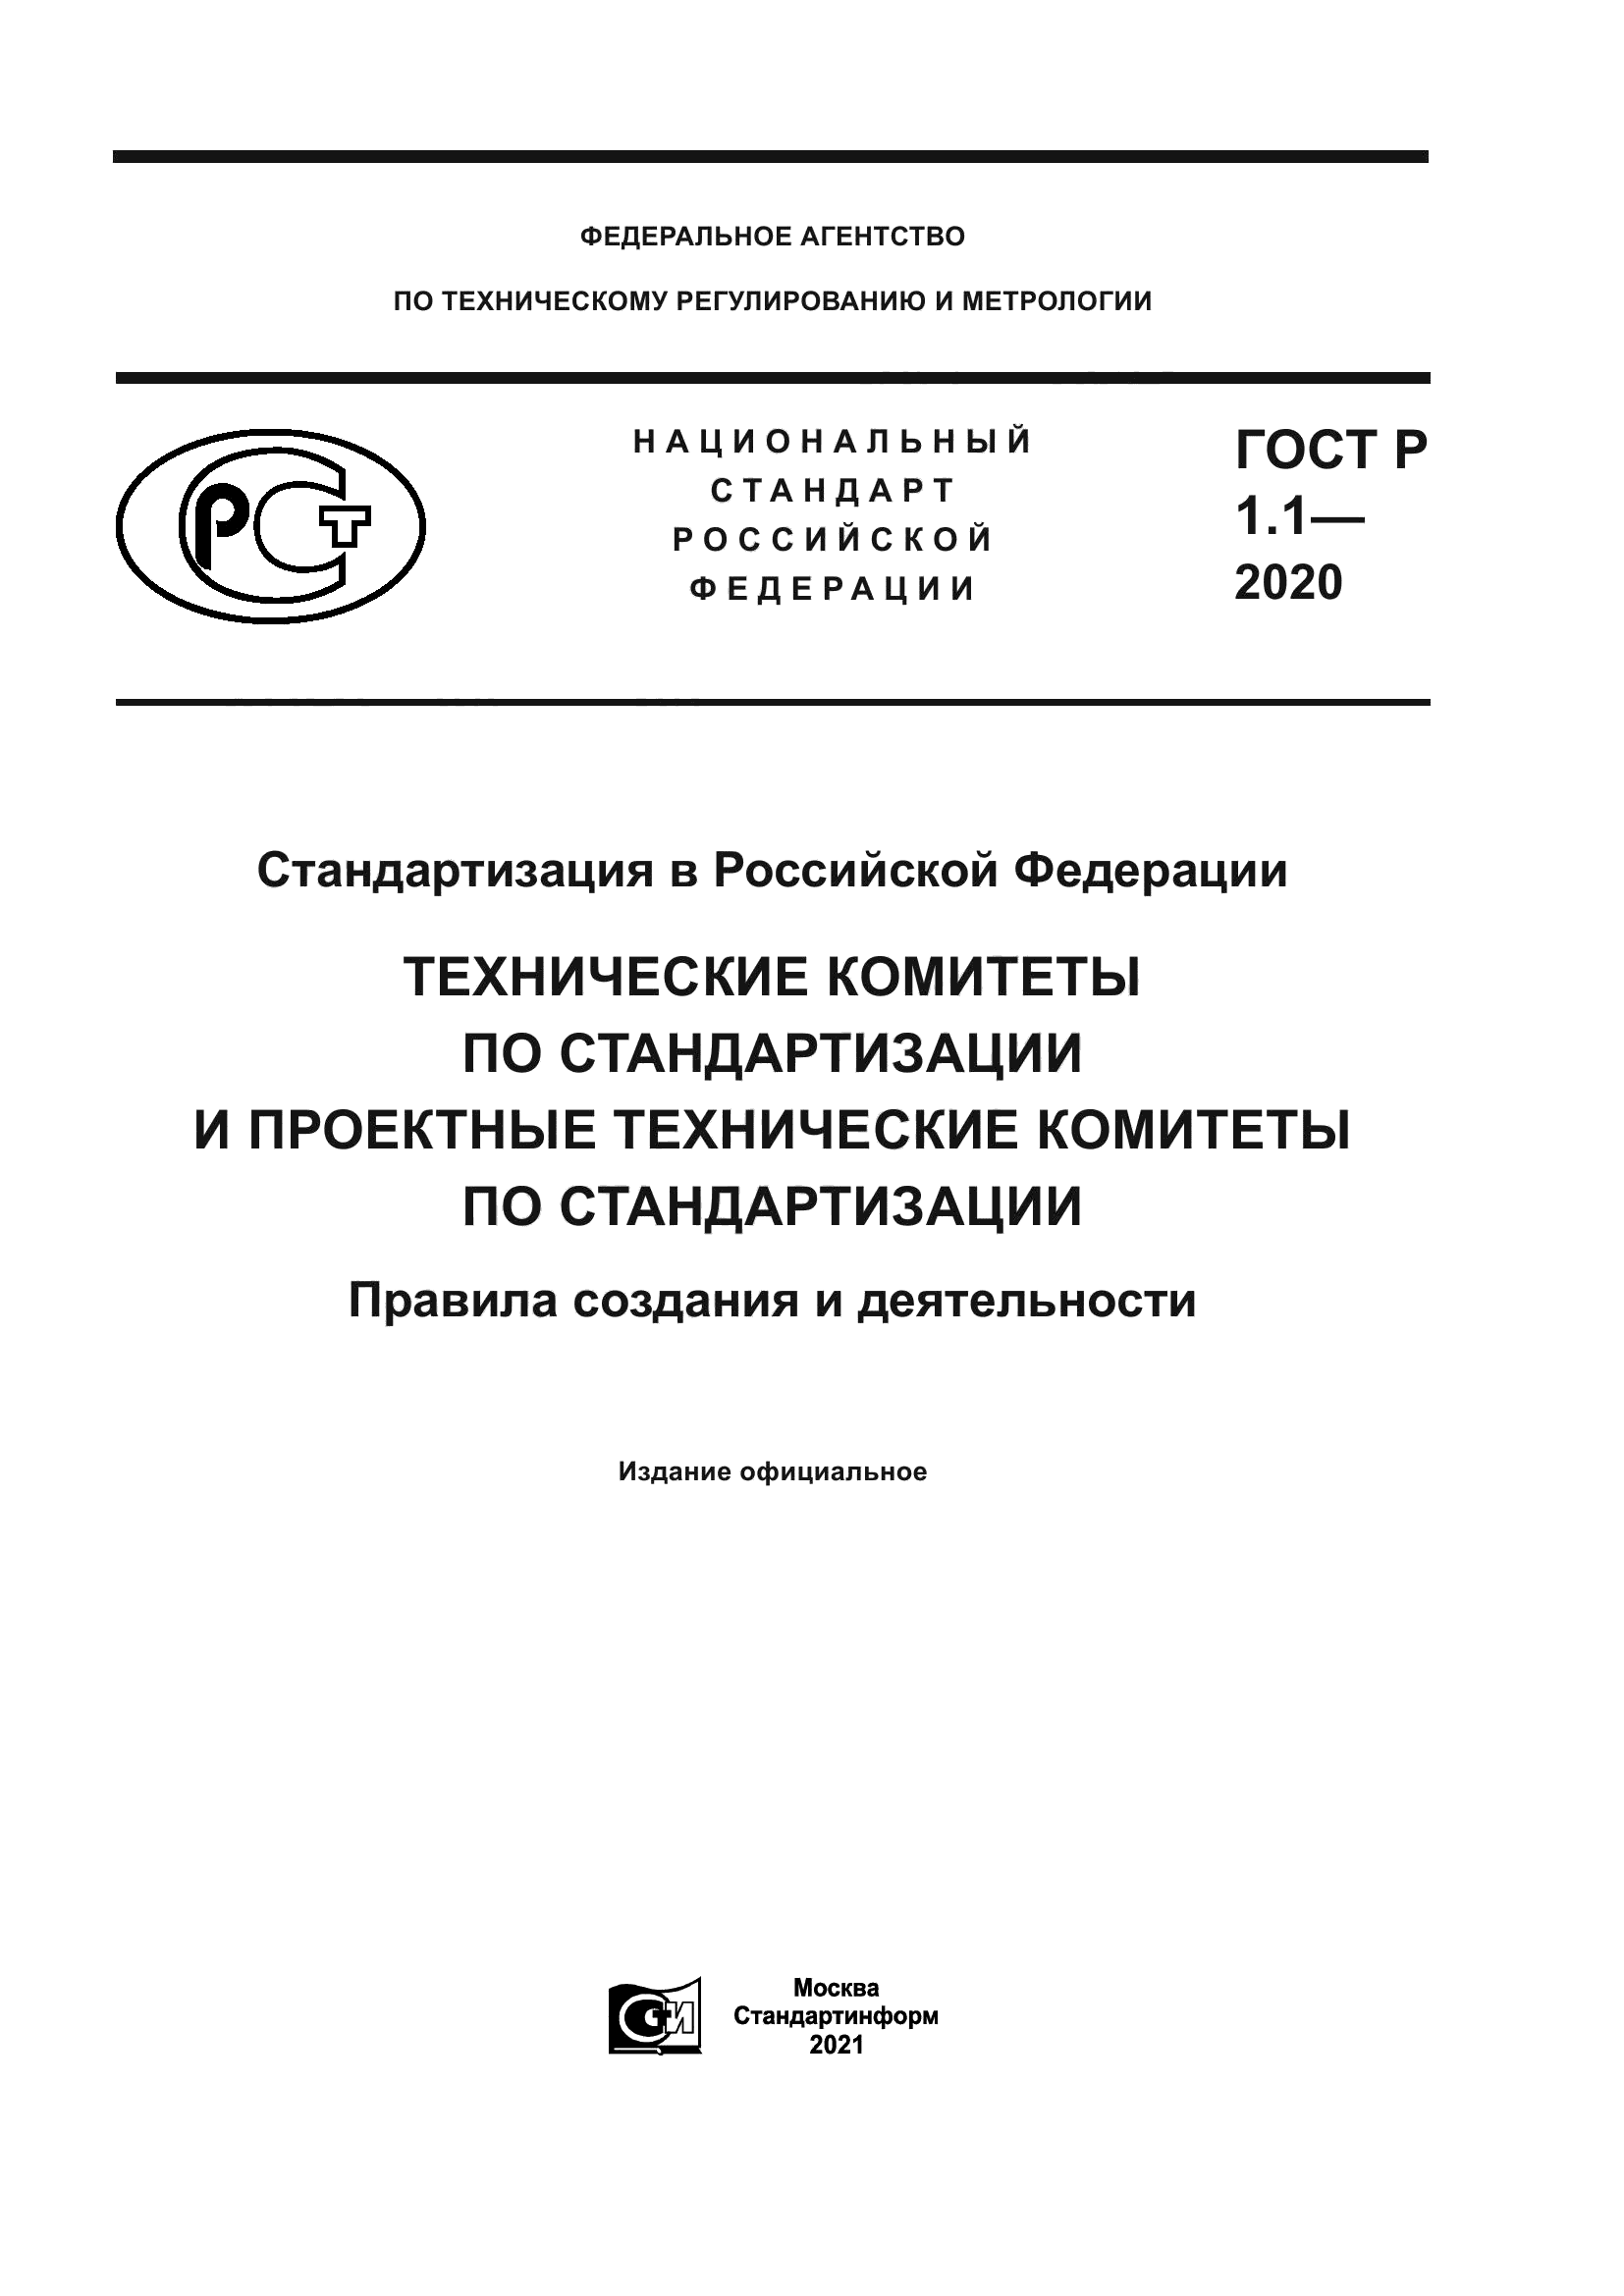 ГОСТ Р 1.1-2020